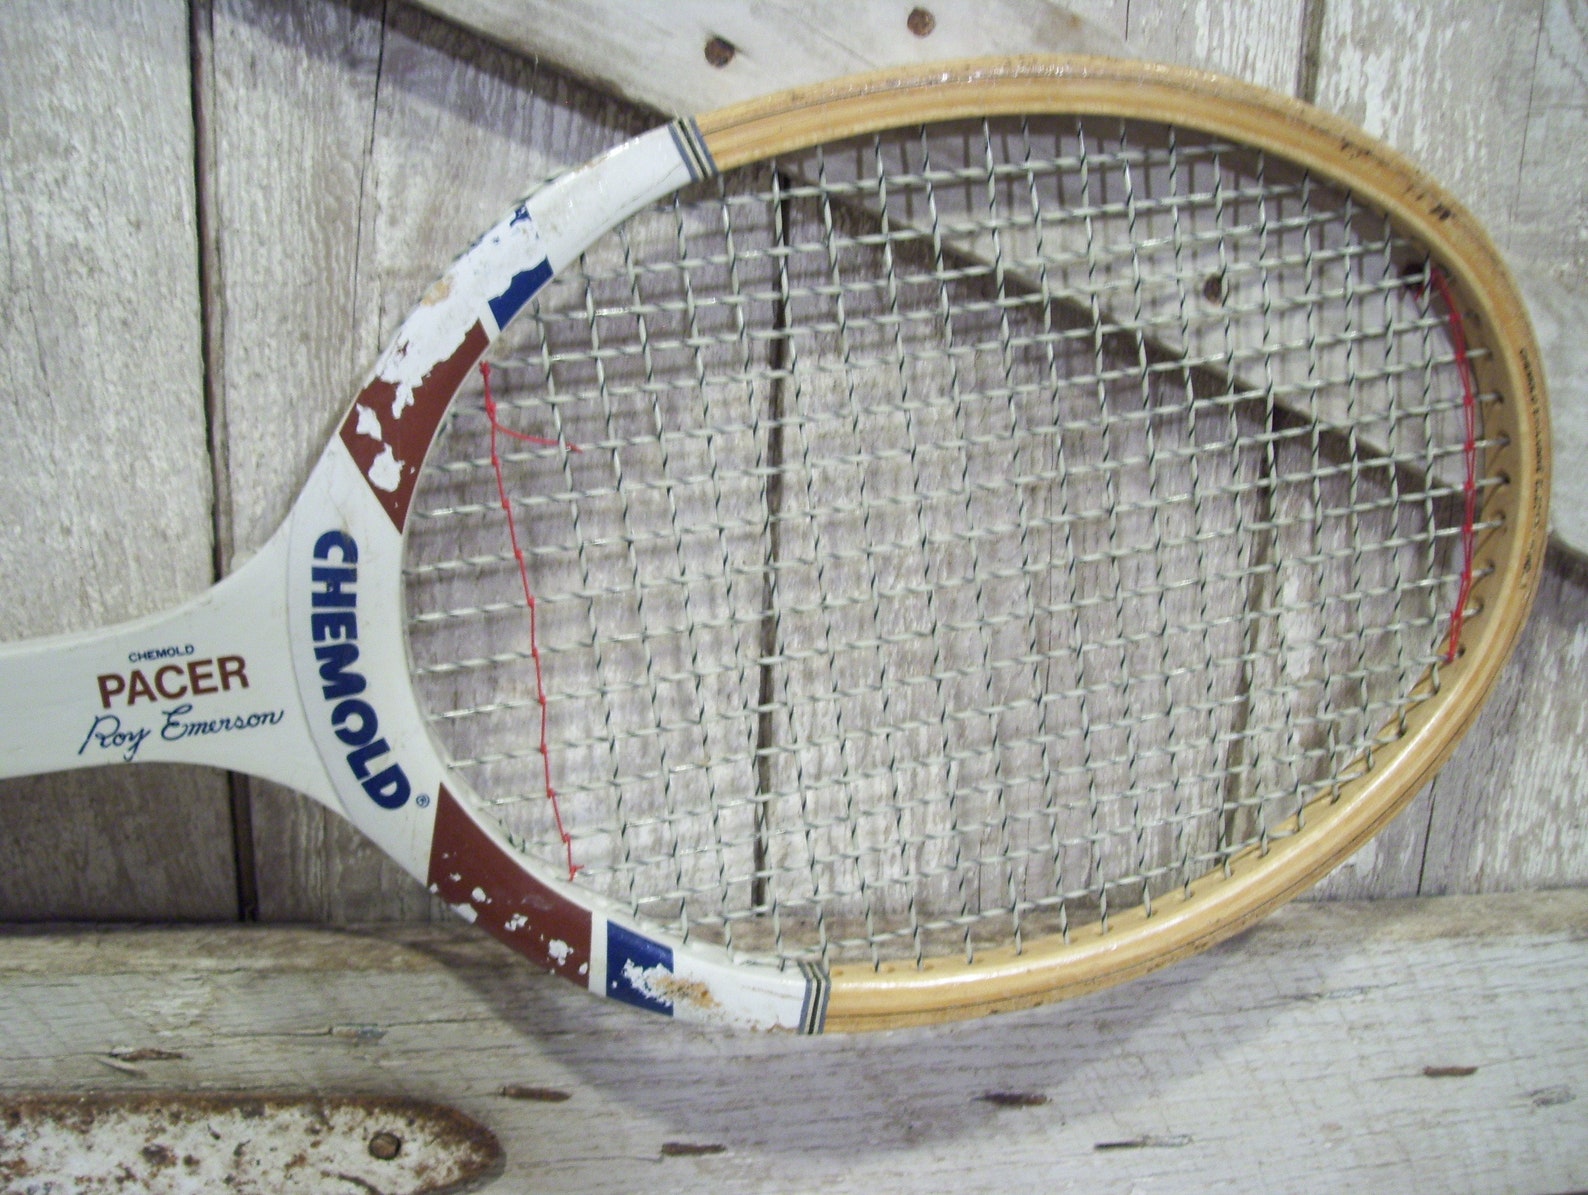 Wood Tennis Racket Spalding Chemold Roy Emerson Net King Etsy